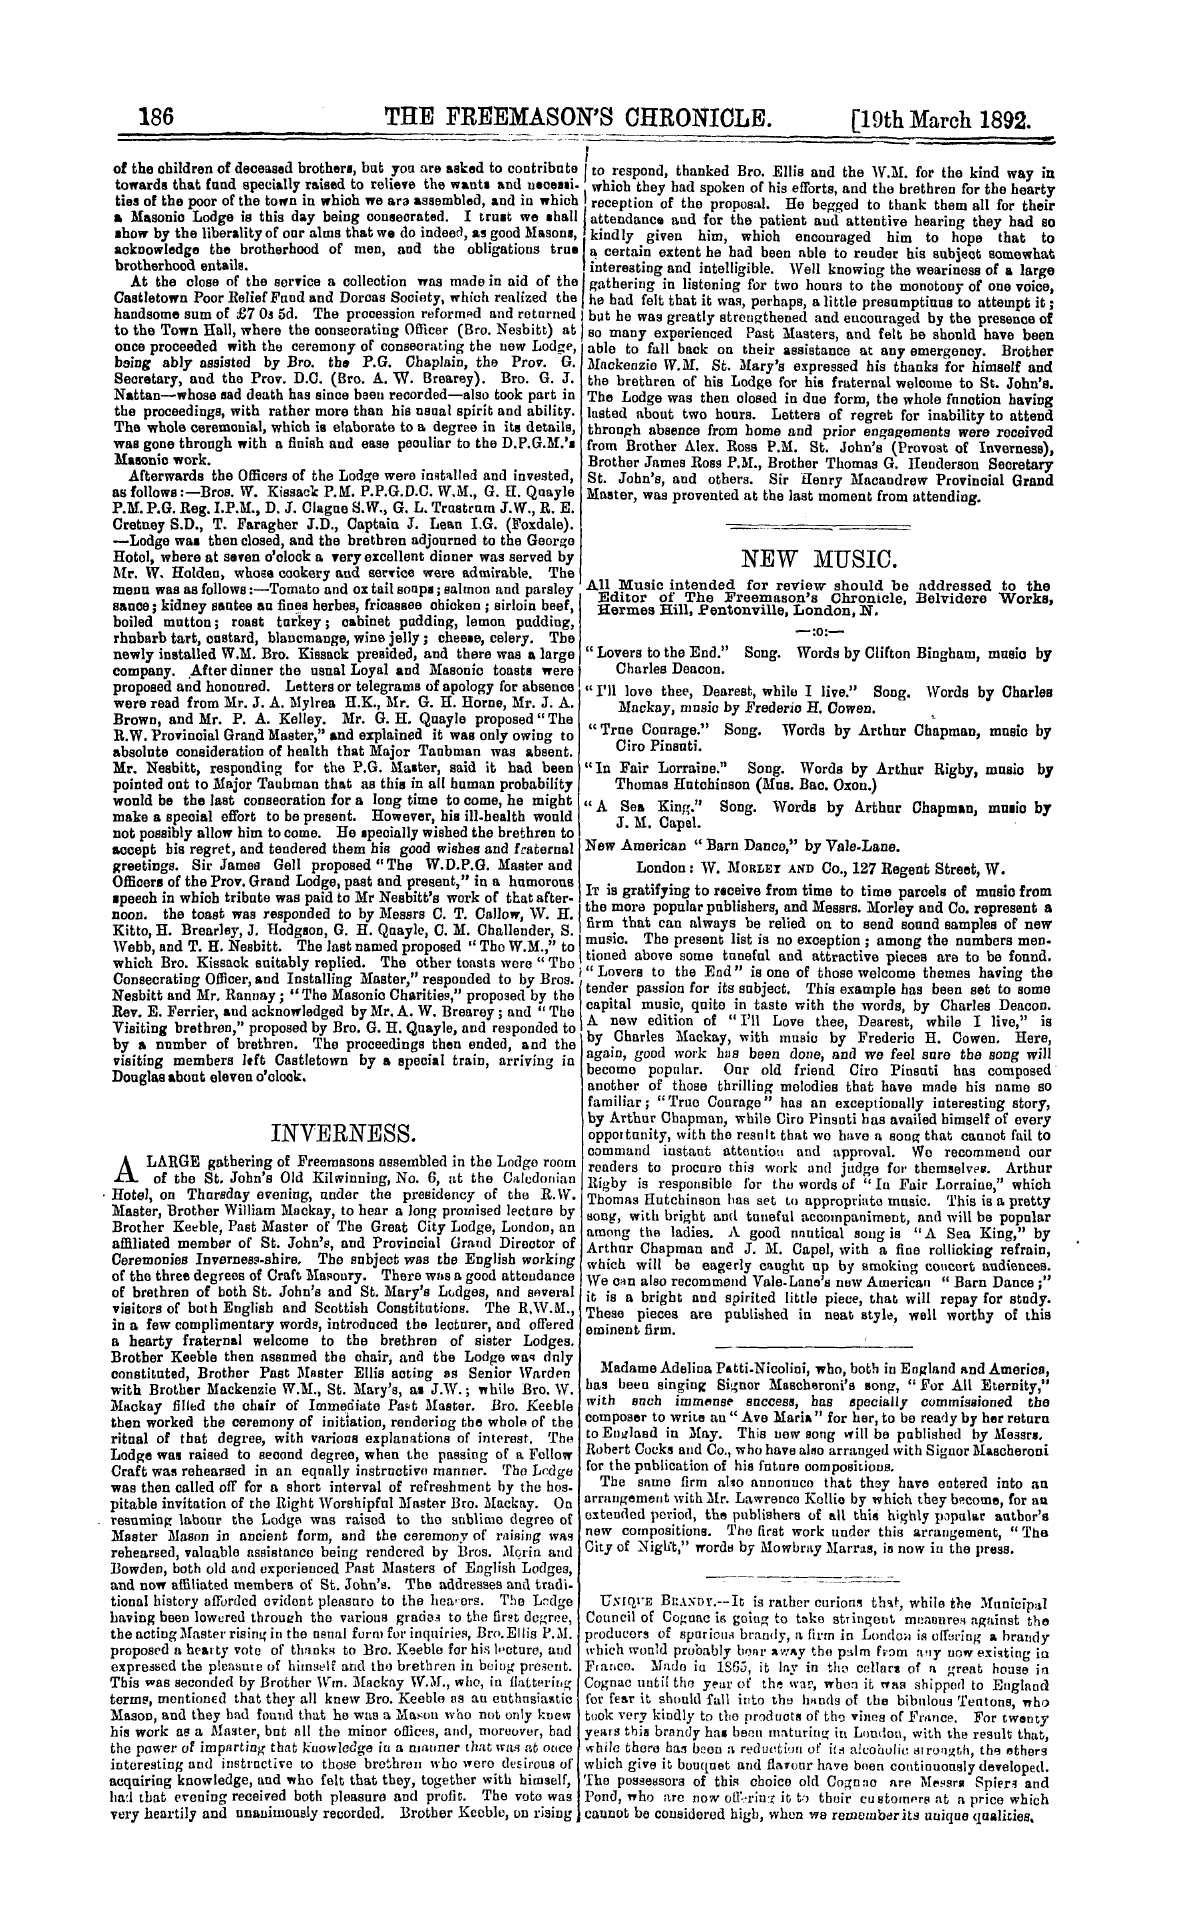 The Freemason's Chronicle: 1892-03-19 - New Music.